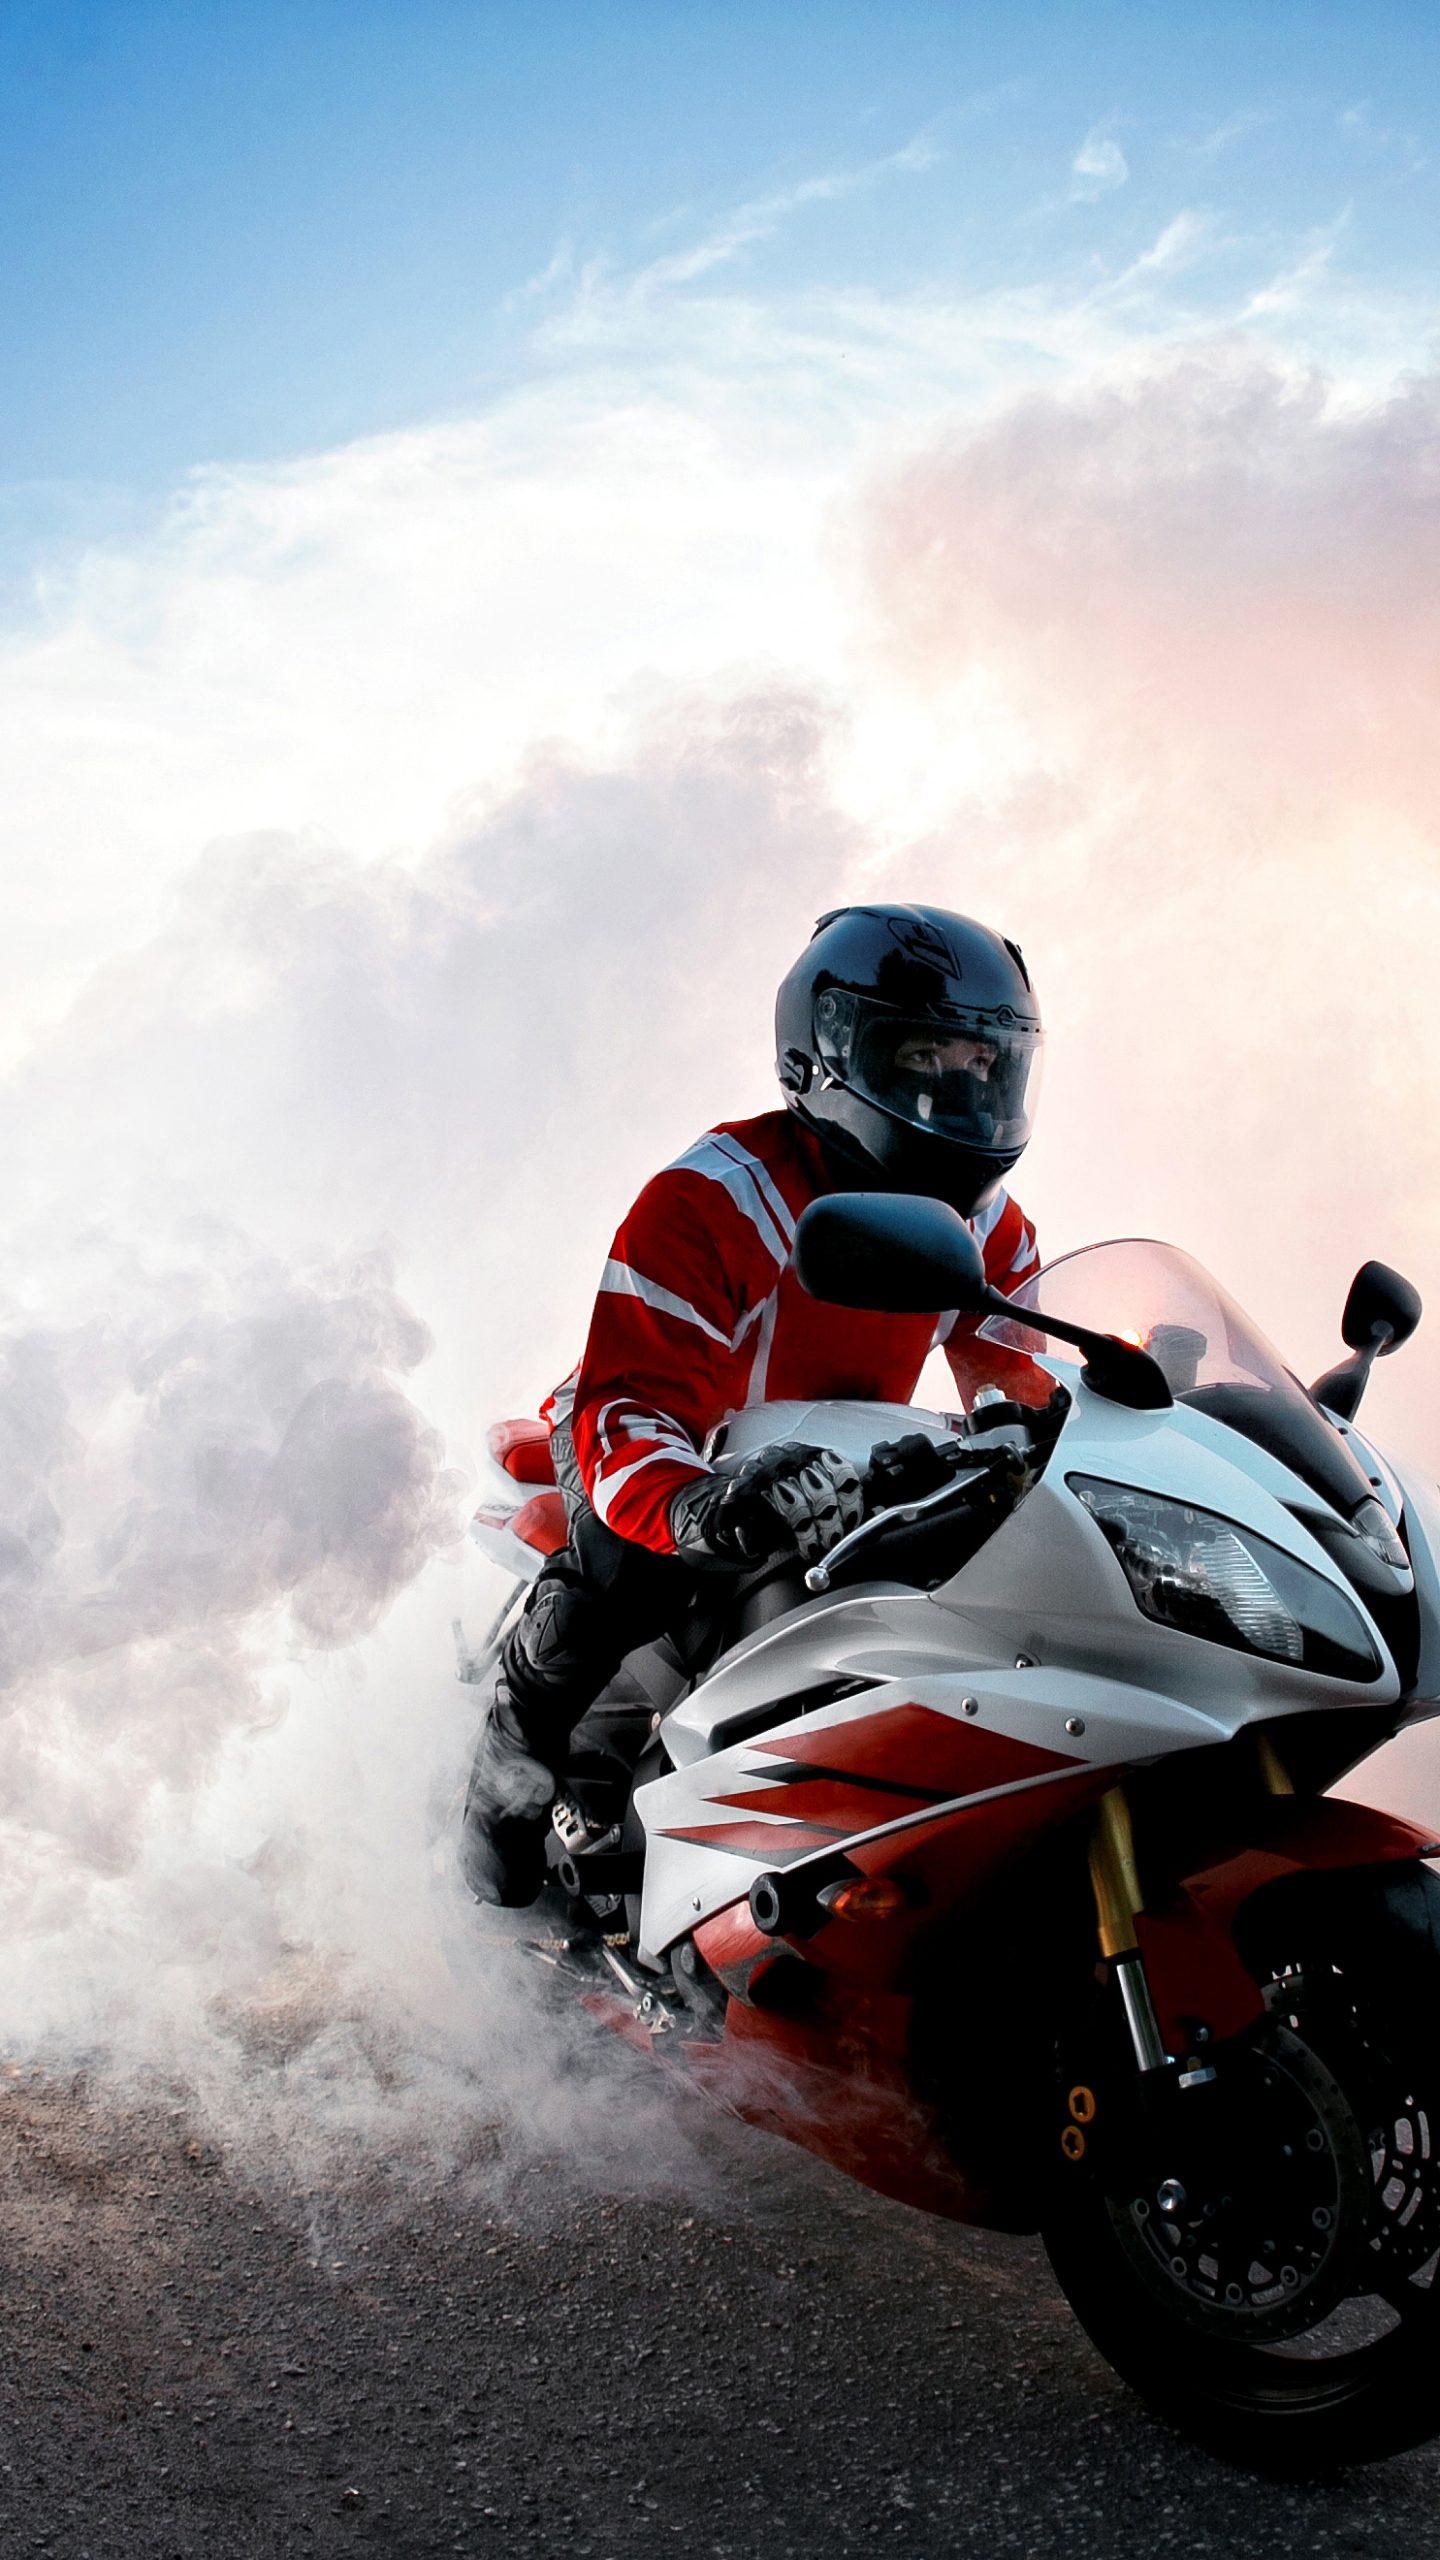 motorcycle wallpaper,vehicle,motorcycle racer,motorcycling,motorcycle,superbike racing